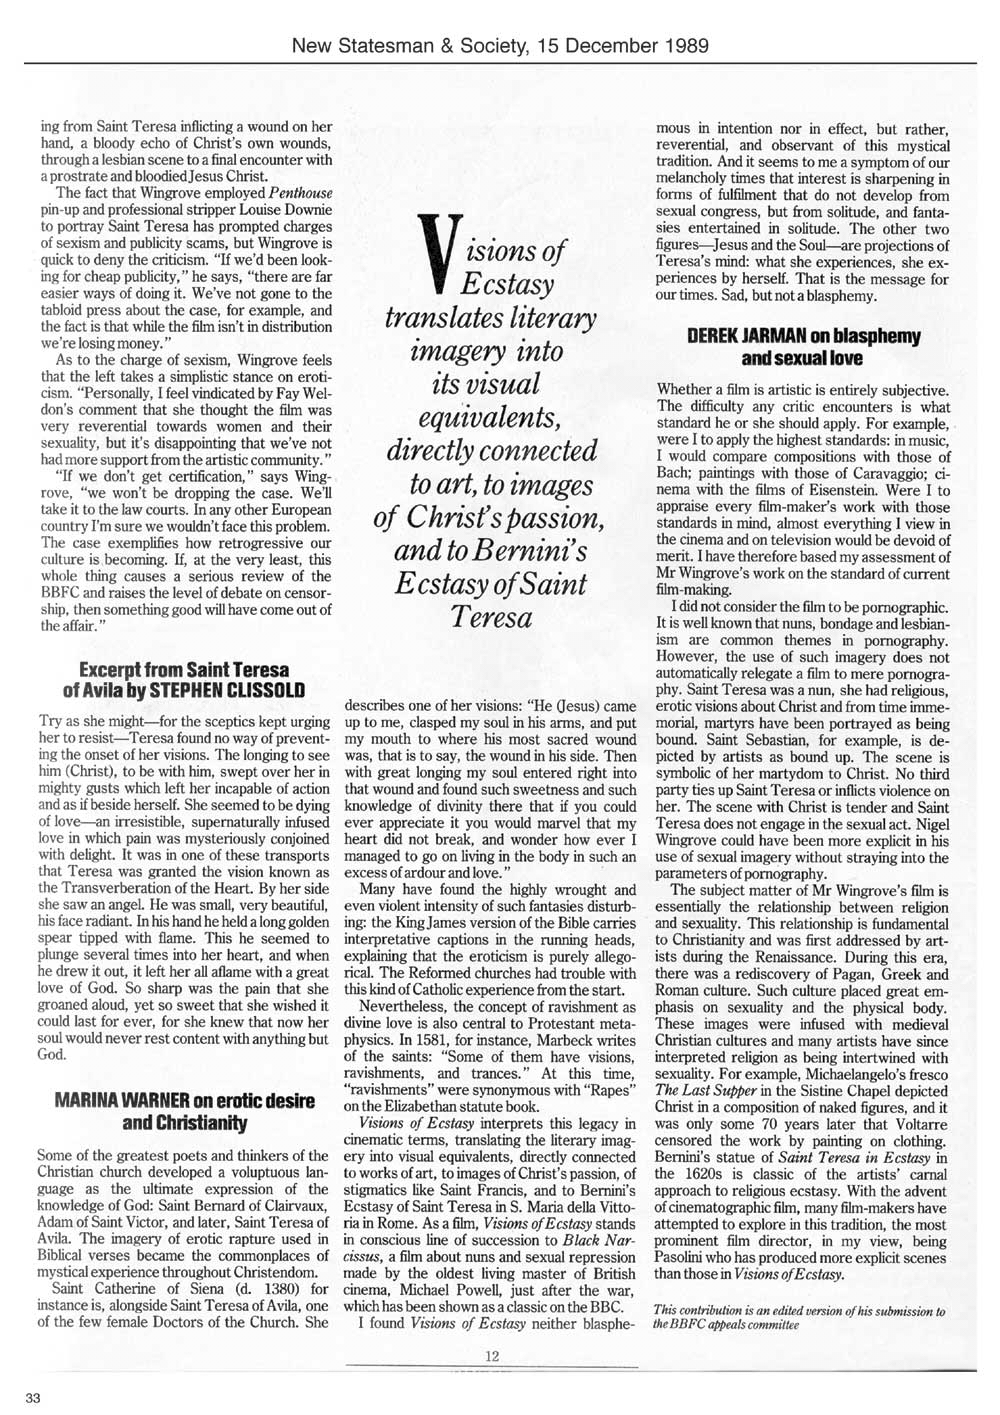 The New Statesman 15 December 1989